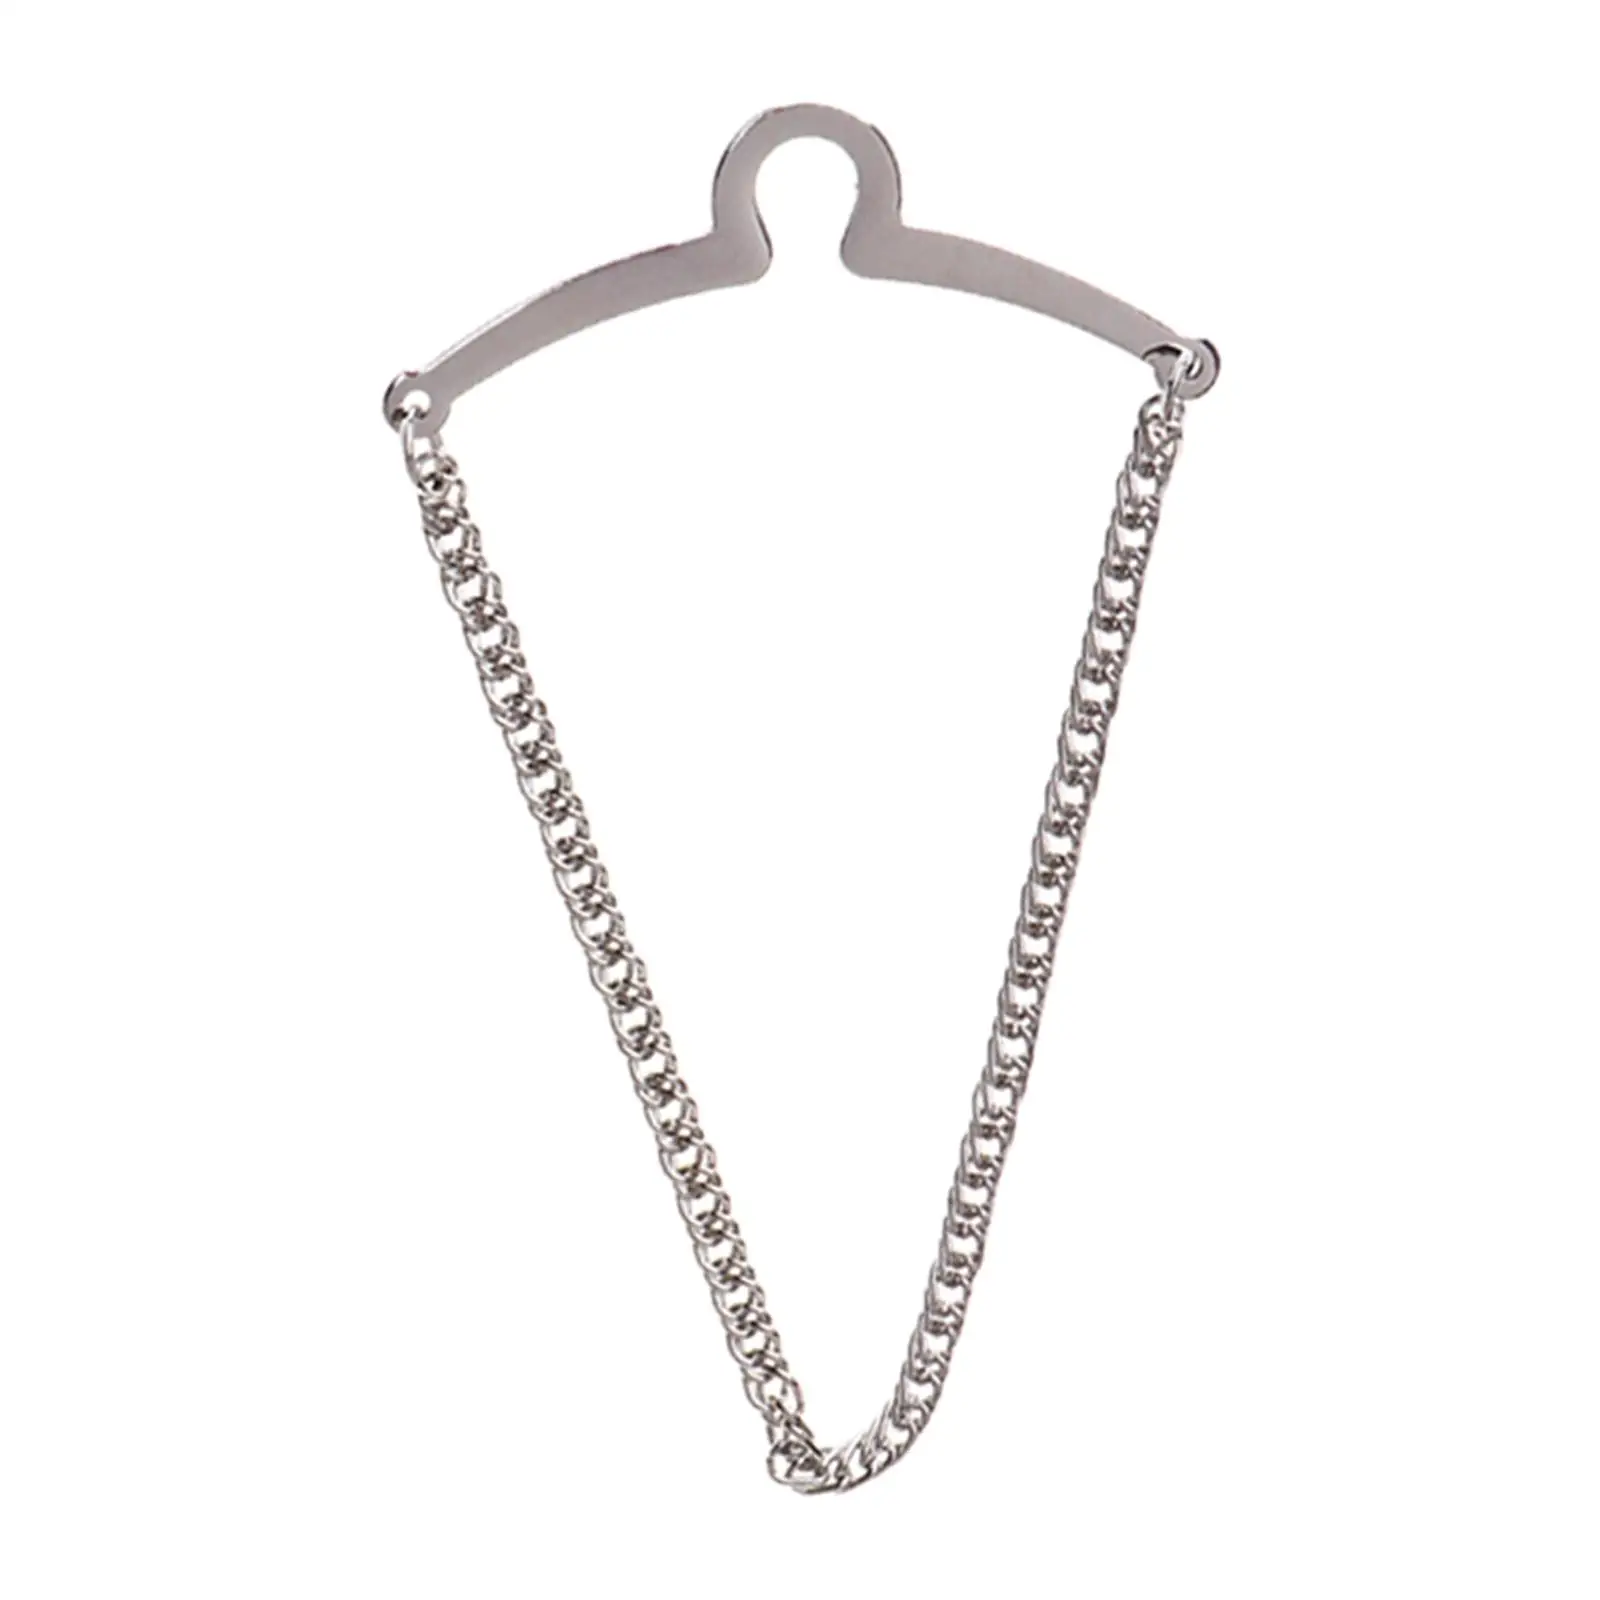 Classic Tie Chain for Men Single Loop Business Wedding Shirt Accessories Necktie Link Chain Silver Tie Clip Brooch